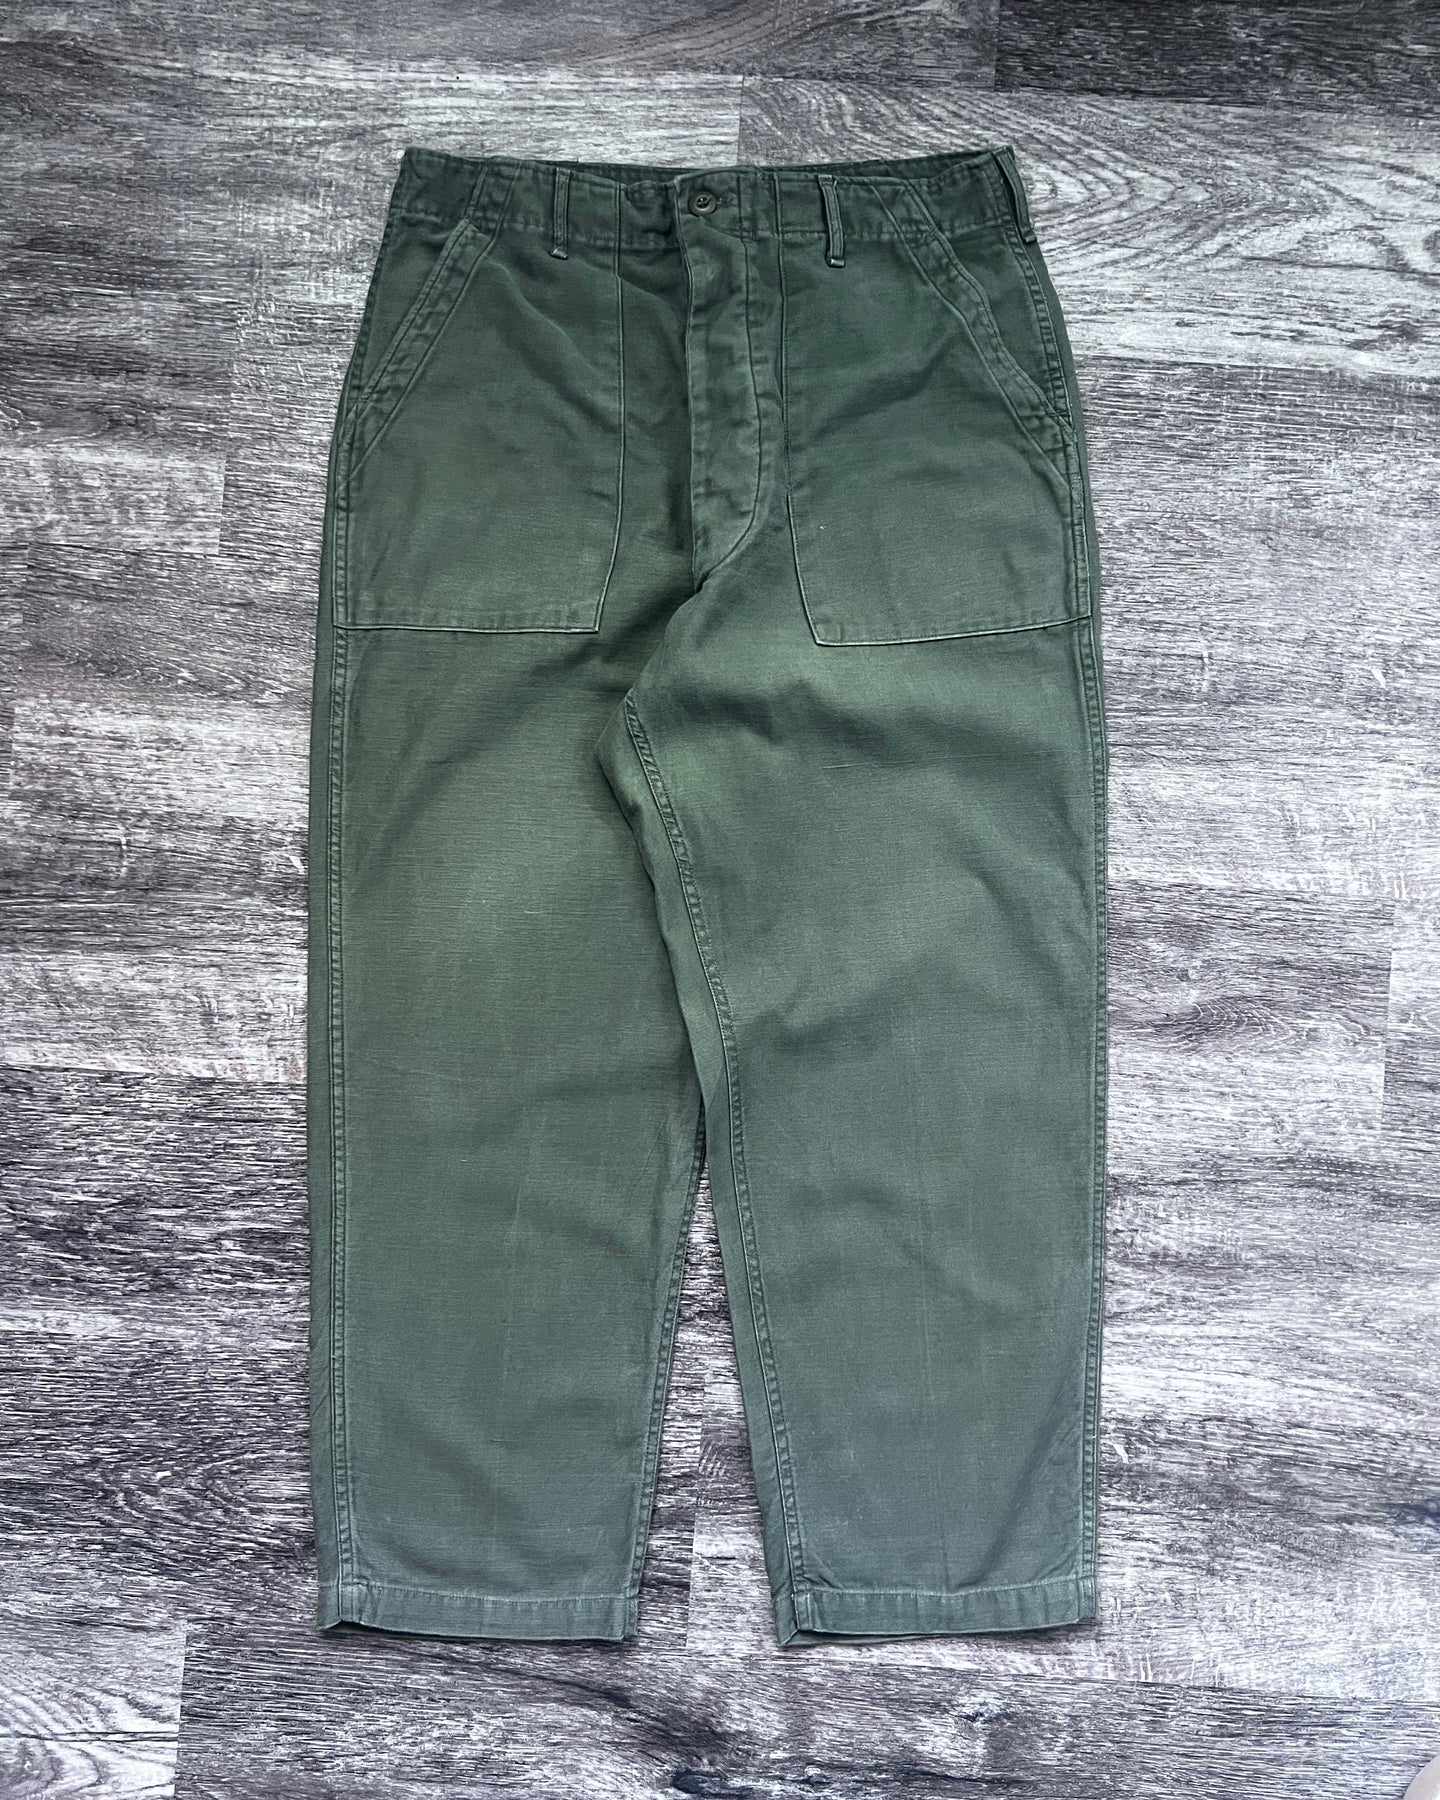 1970s OG-107 Fatigue Pants - Size 32 x 28